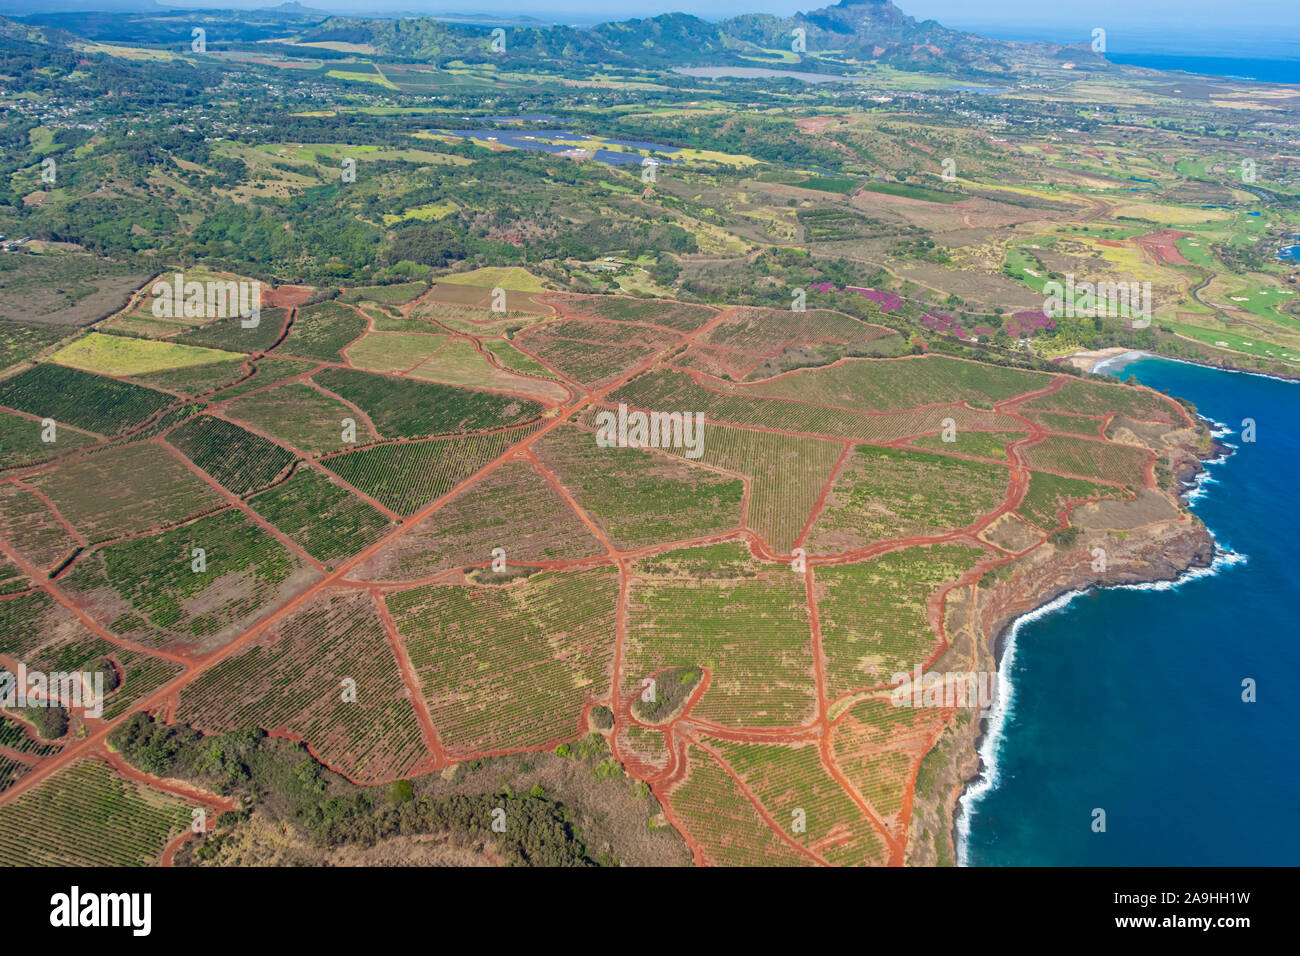 Aerial view of Kauai south coast showing coffee plantations near Poipu Kauai Hawaii USA Stock Photo